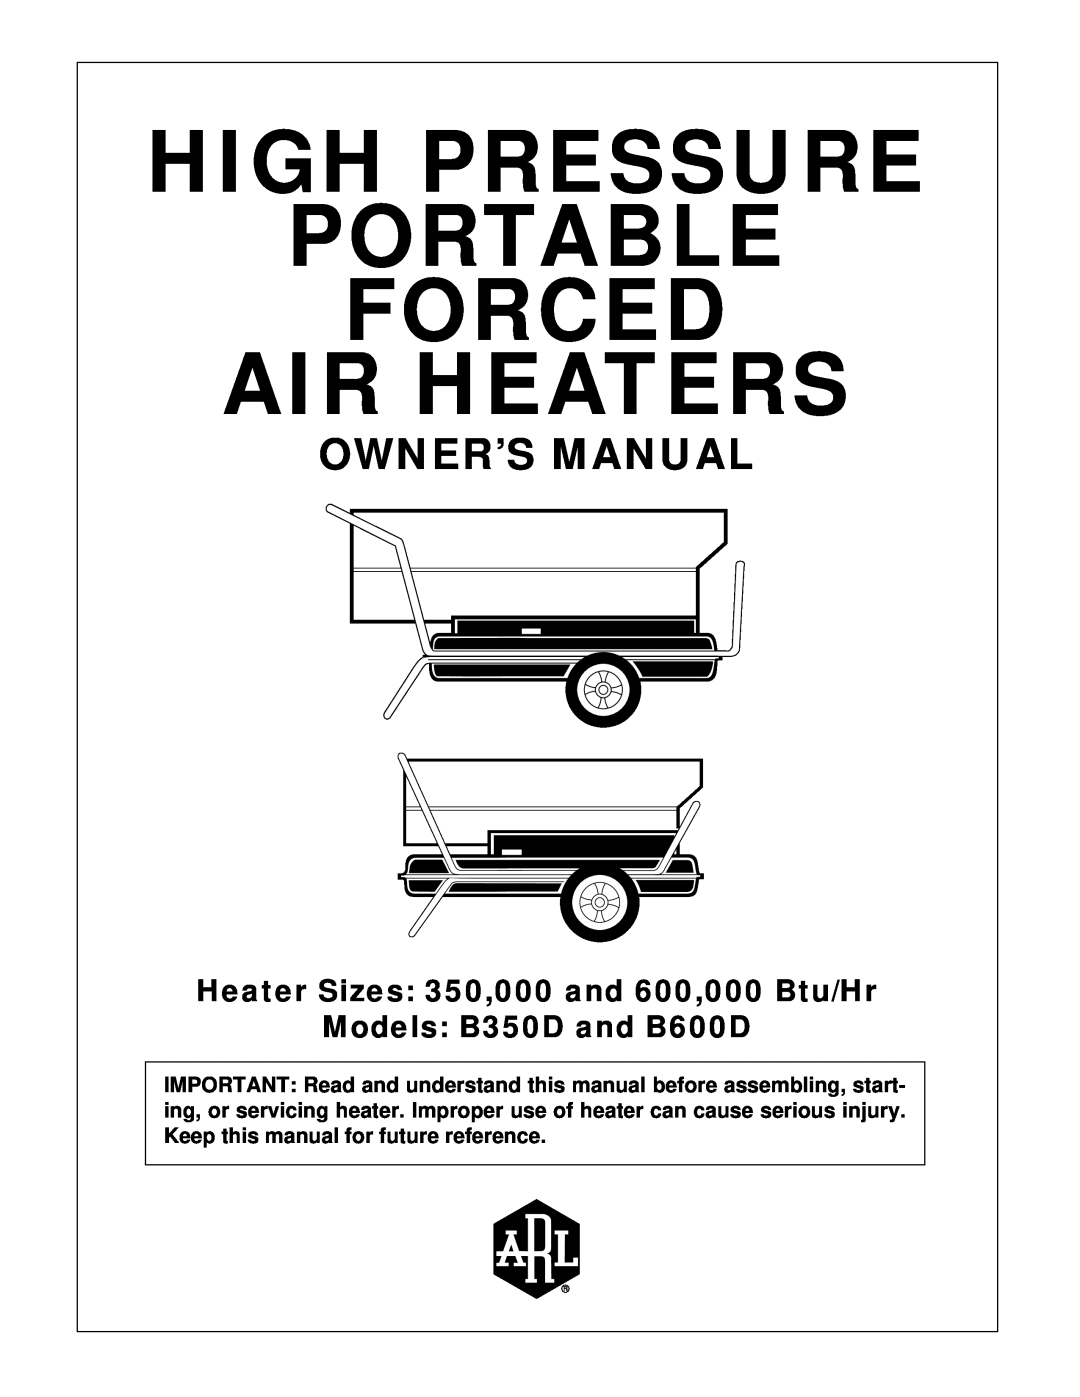 Desa B350D owner manual High Pressure Portable Forced Air Heaters, Heater Sizes 350,000 and 600,000 Btu/Hr, Arl Logo 